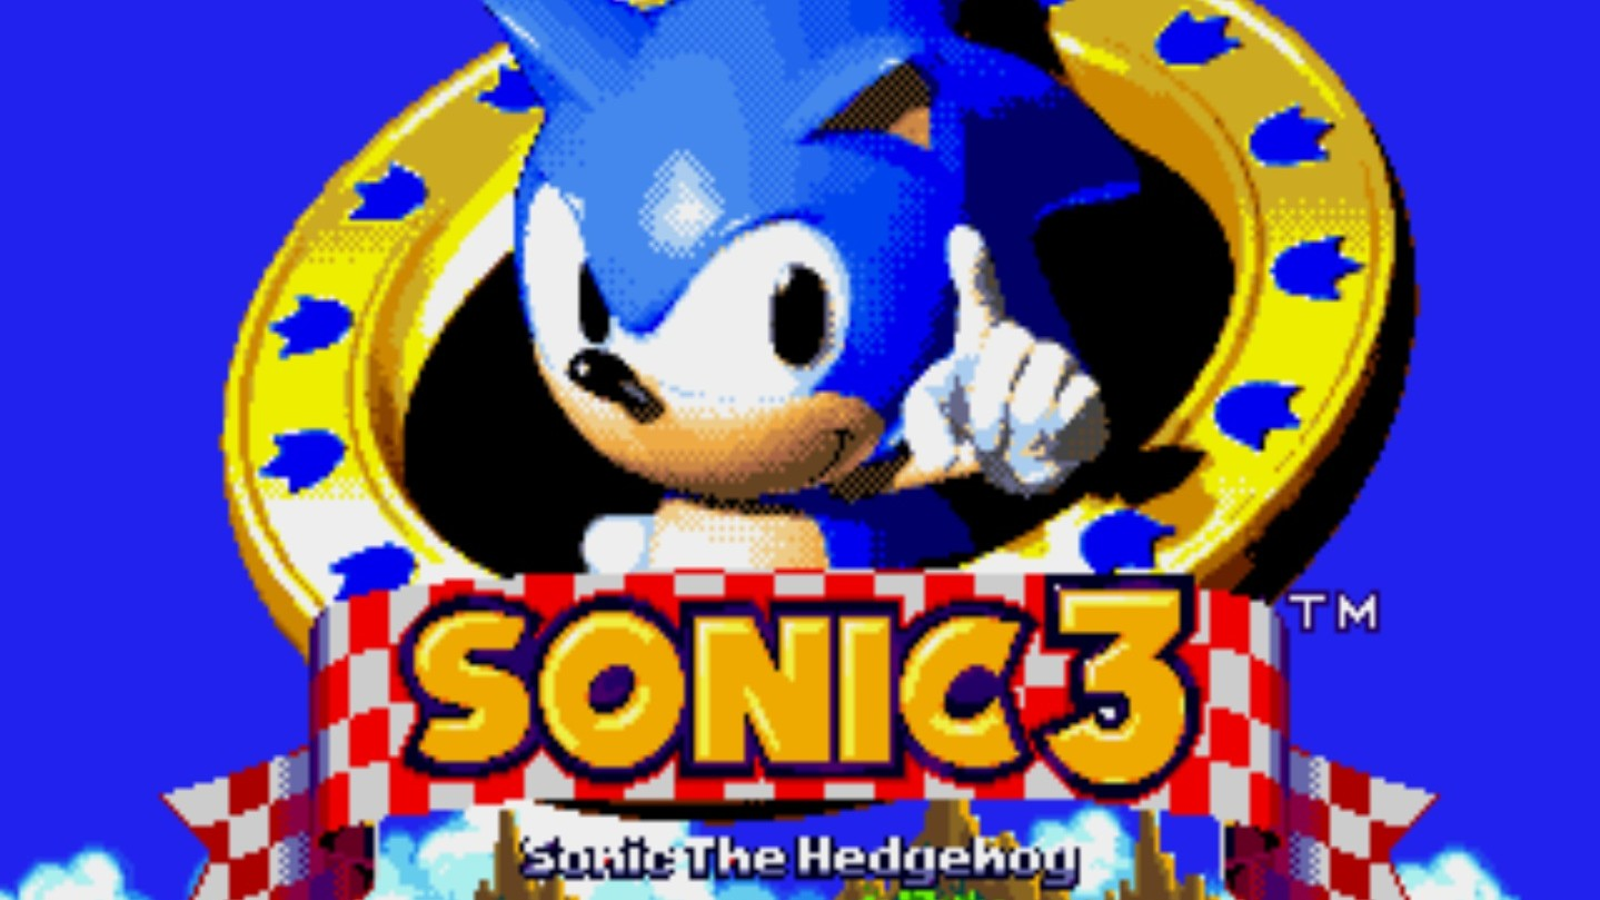 🕹️ Play Retro Games Online: Sonic 3 Complete (SEGA)